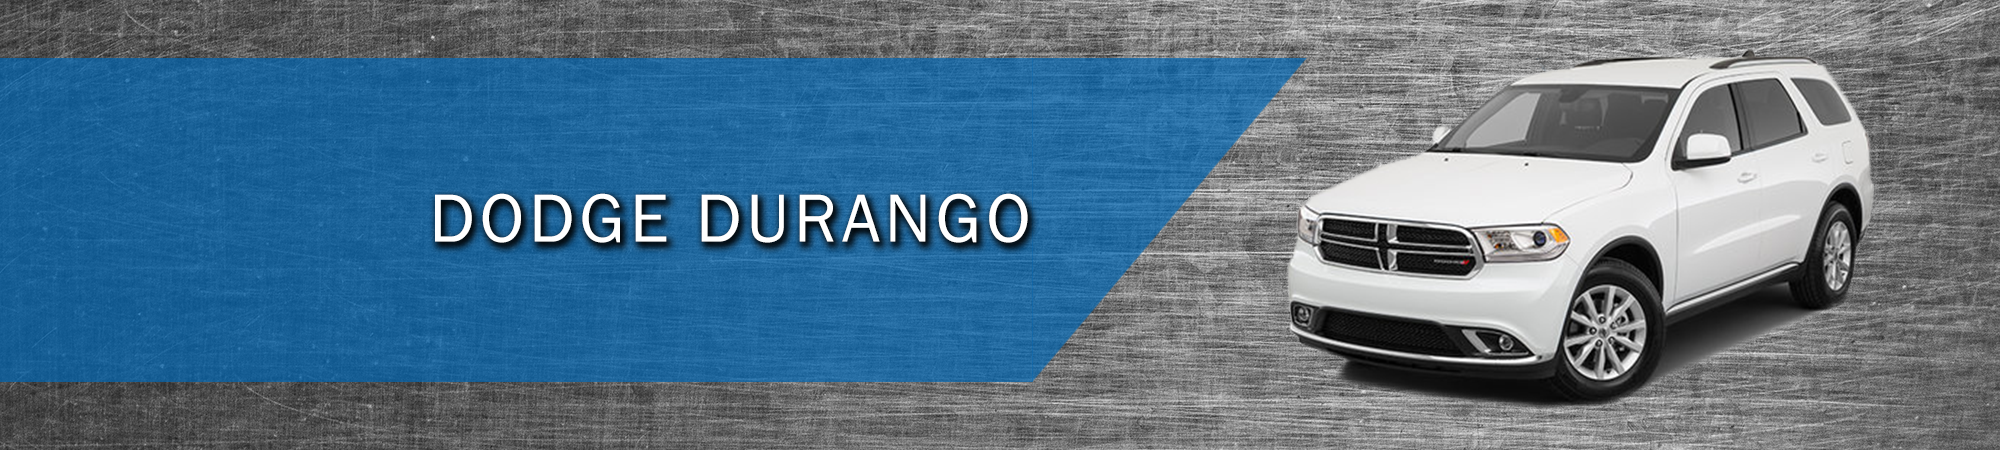 Durango SSV